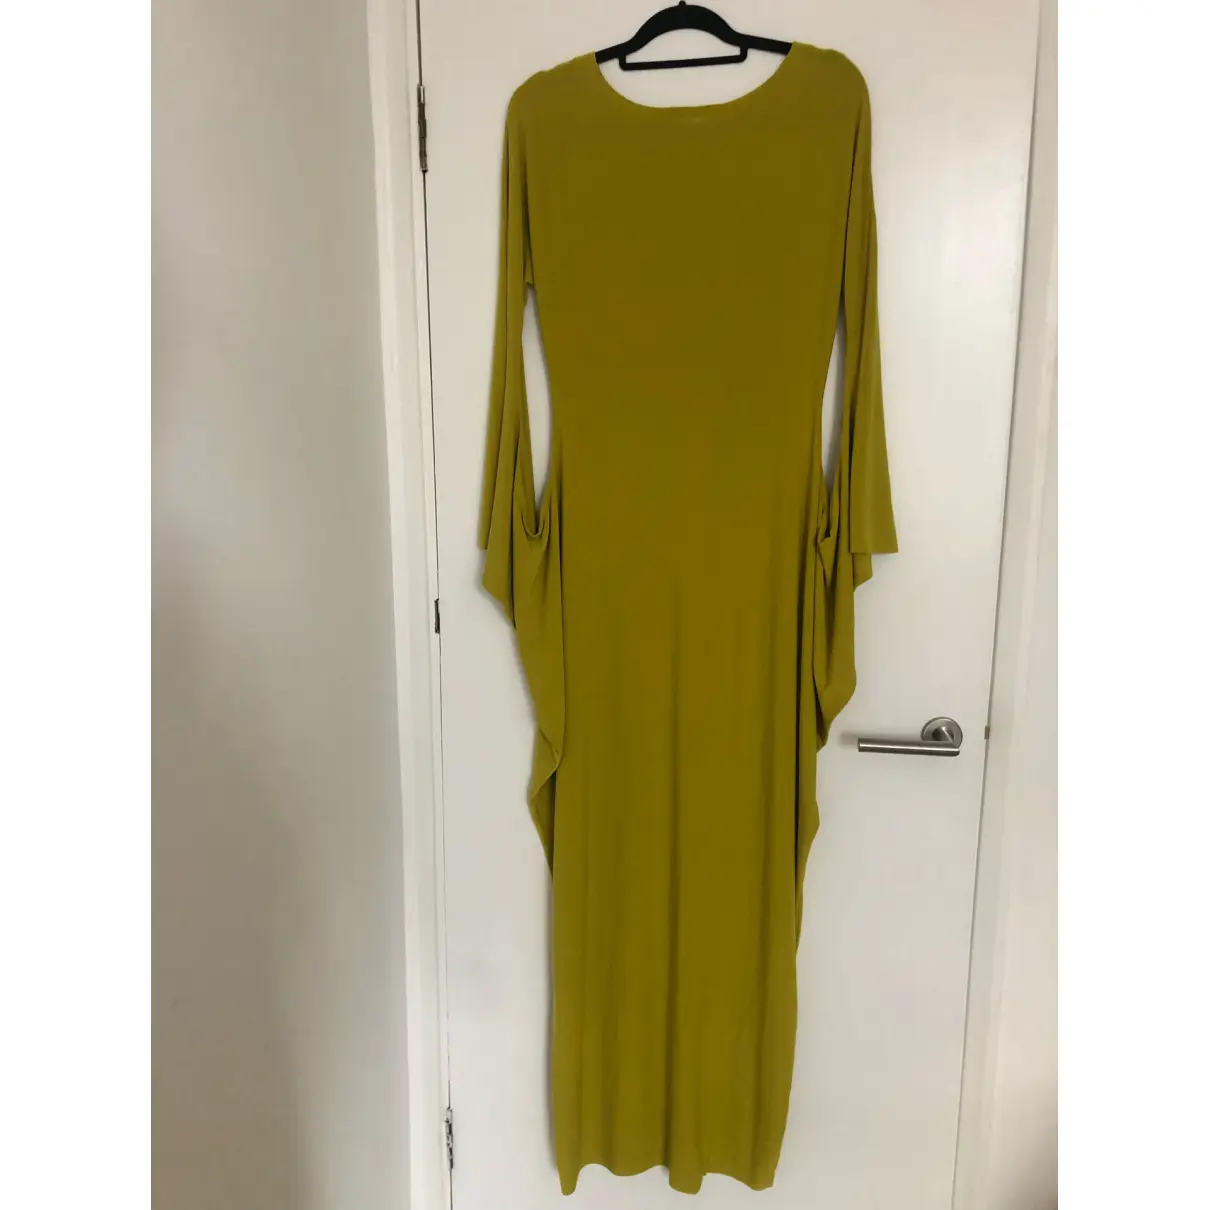 Buy Norma Kamali Maxi dress online